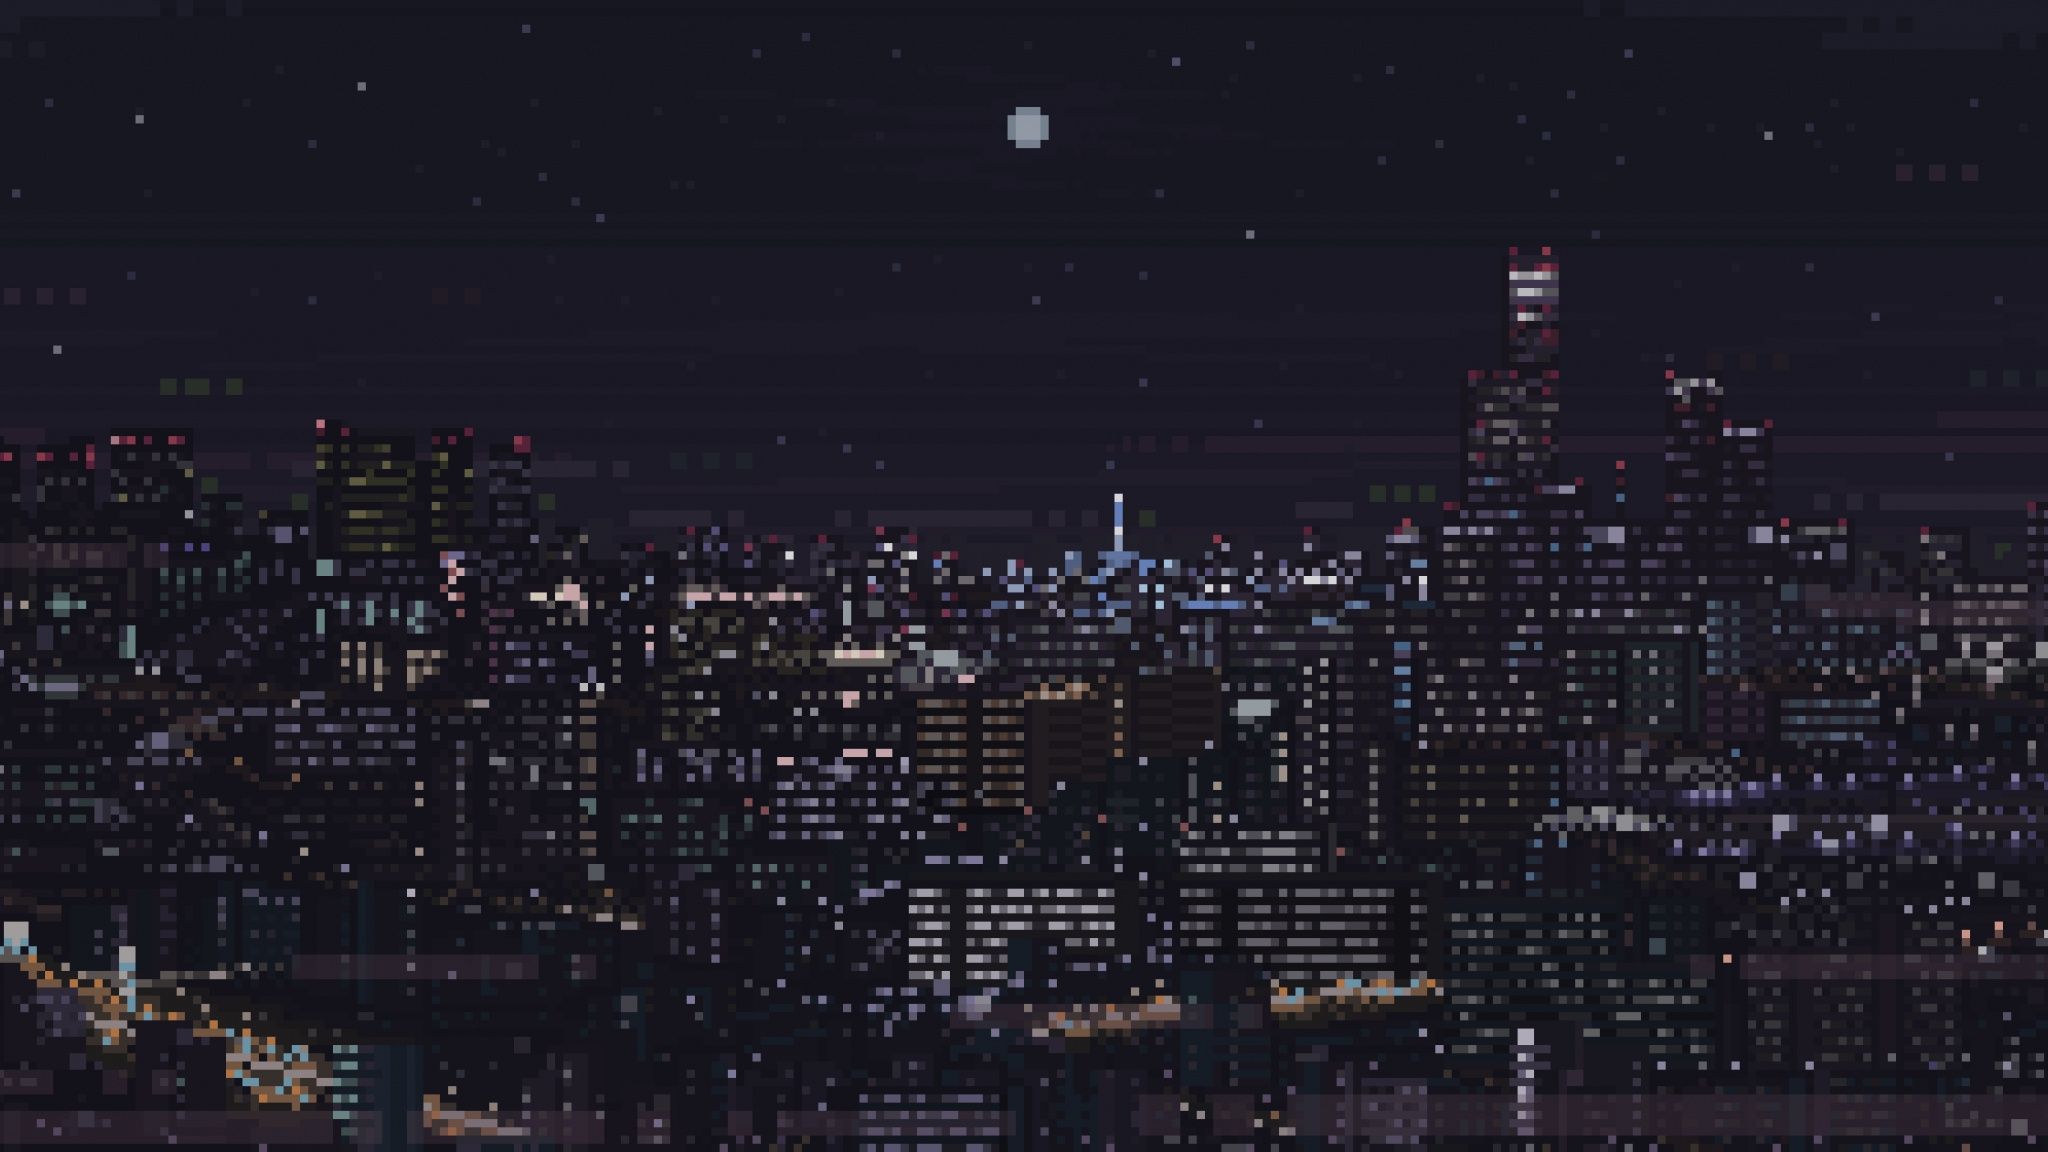 Download Cityscape, dark, pixel art wallpaper, 2048x Dual Wide, Widescreen